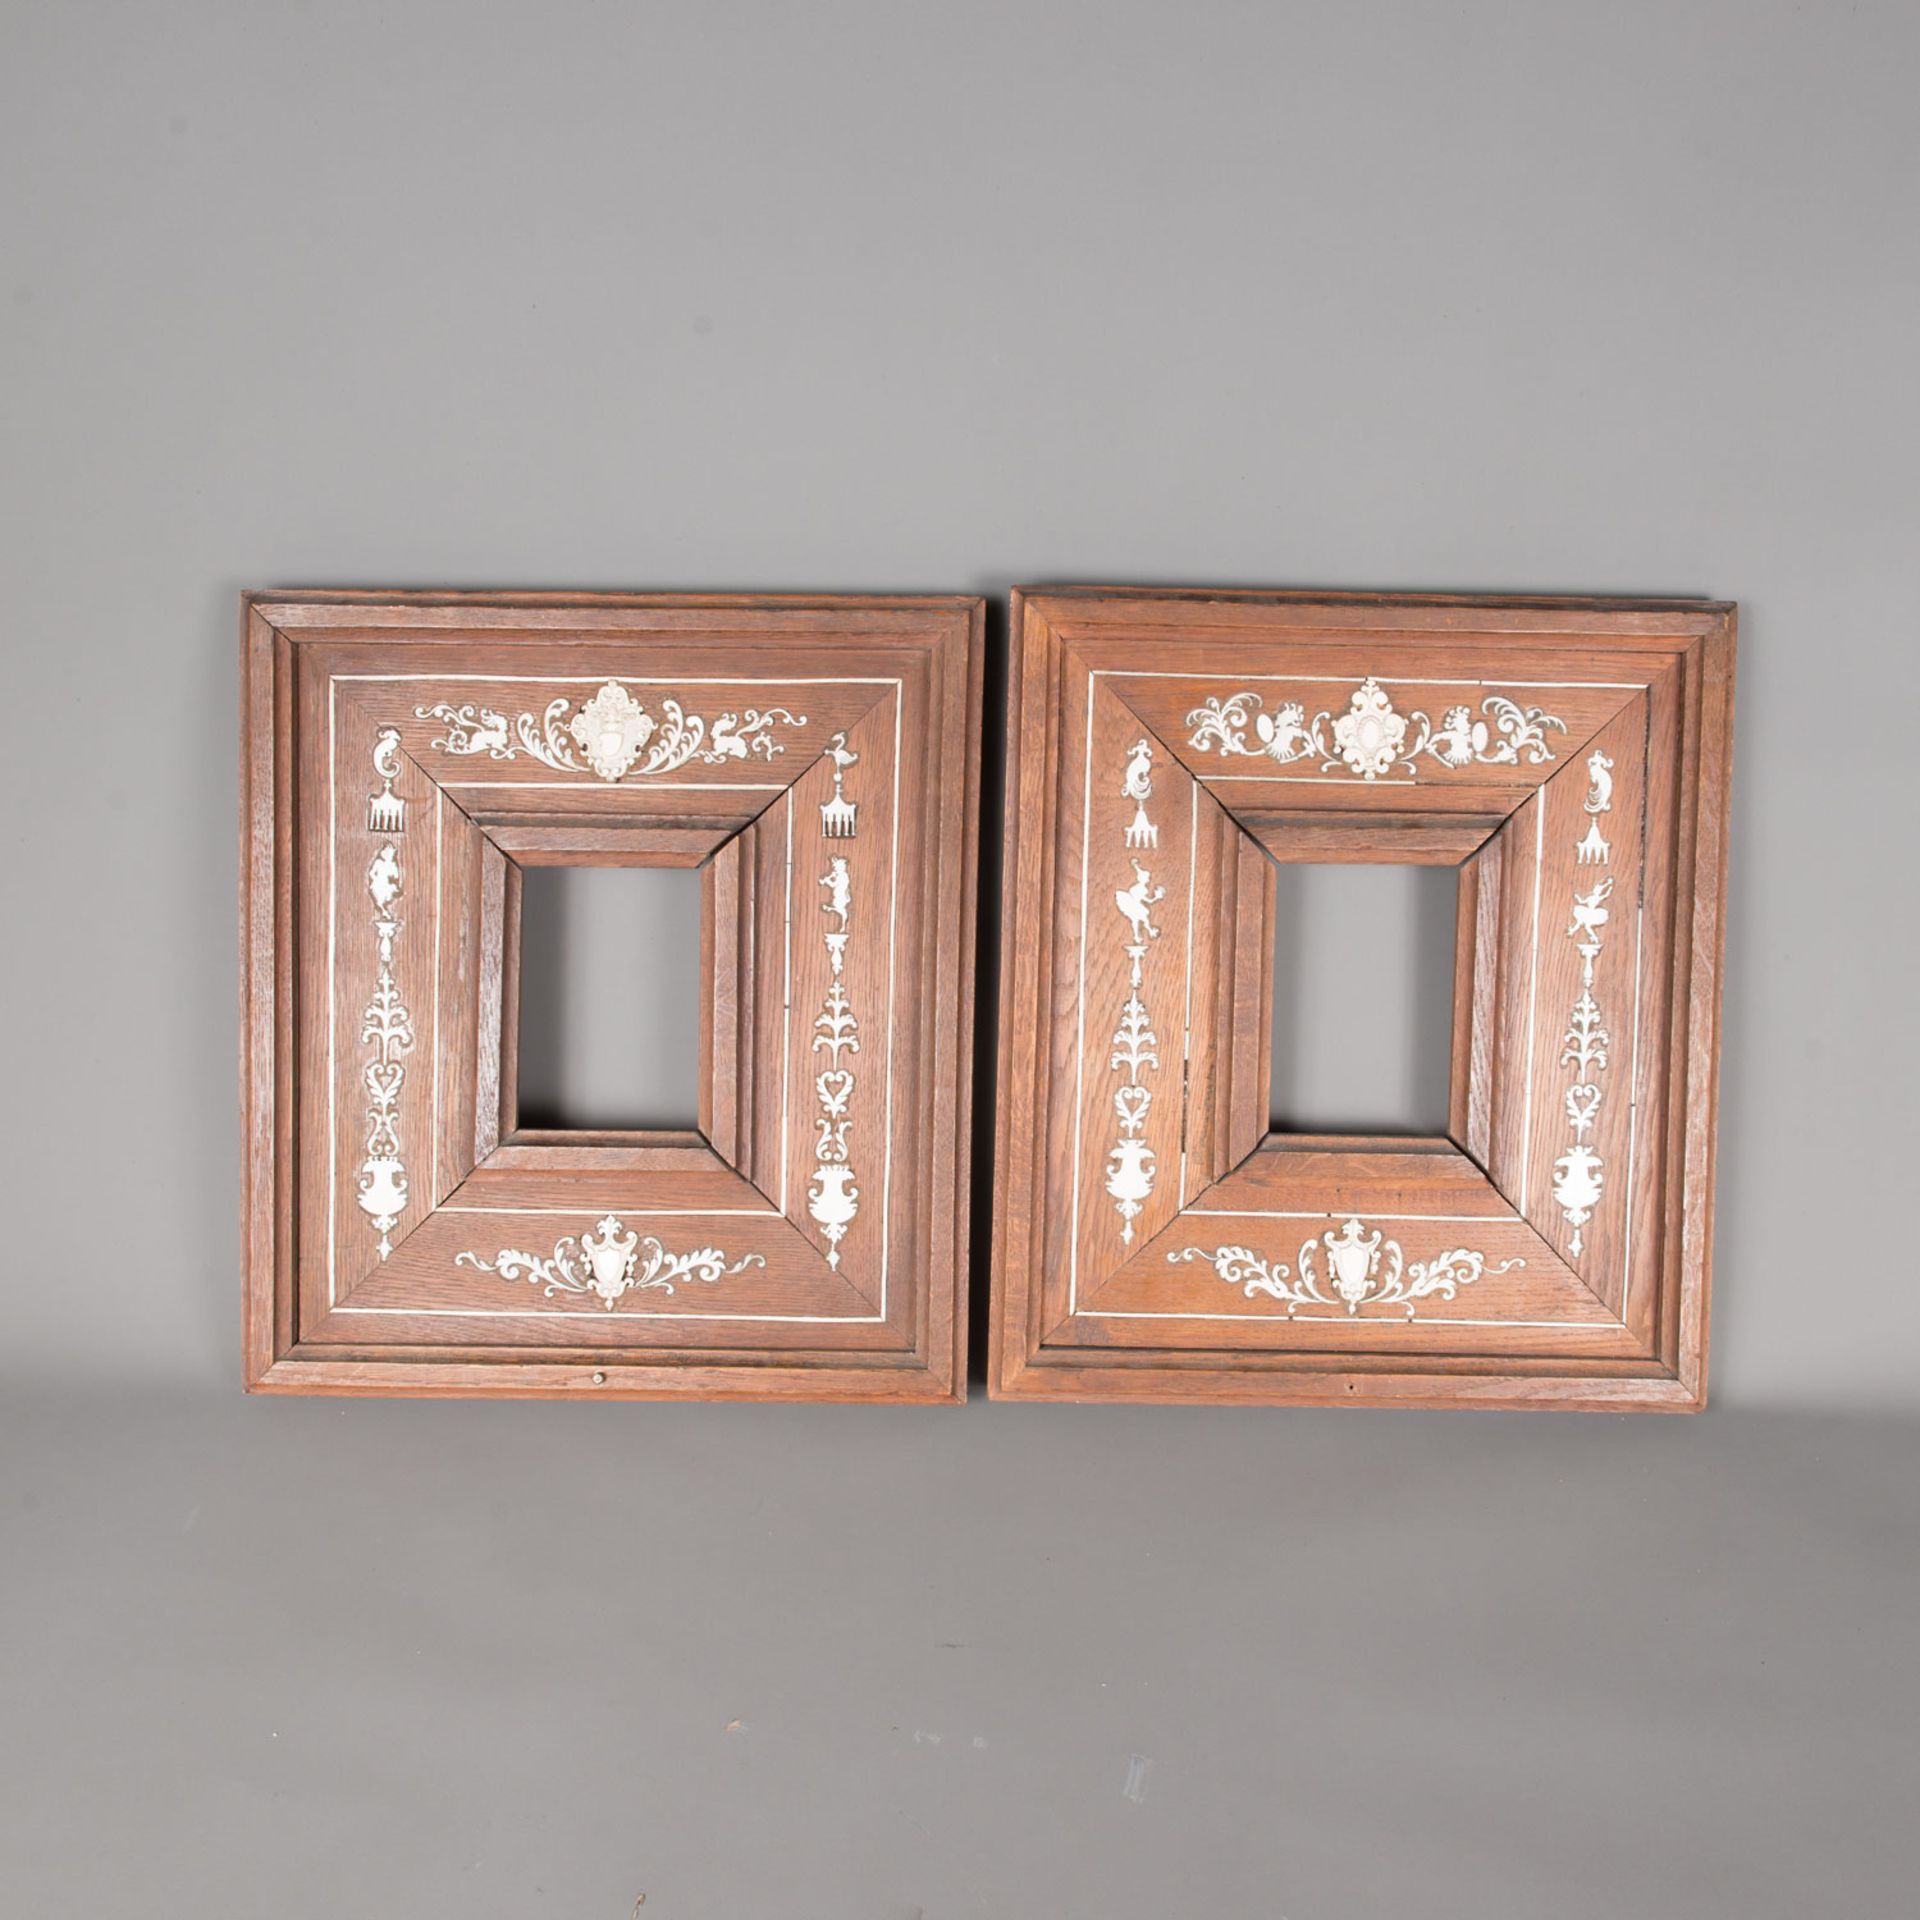 Pair of Silveresian frames